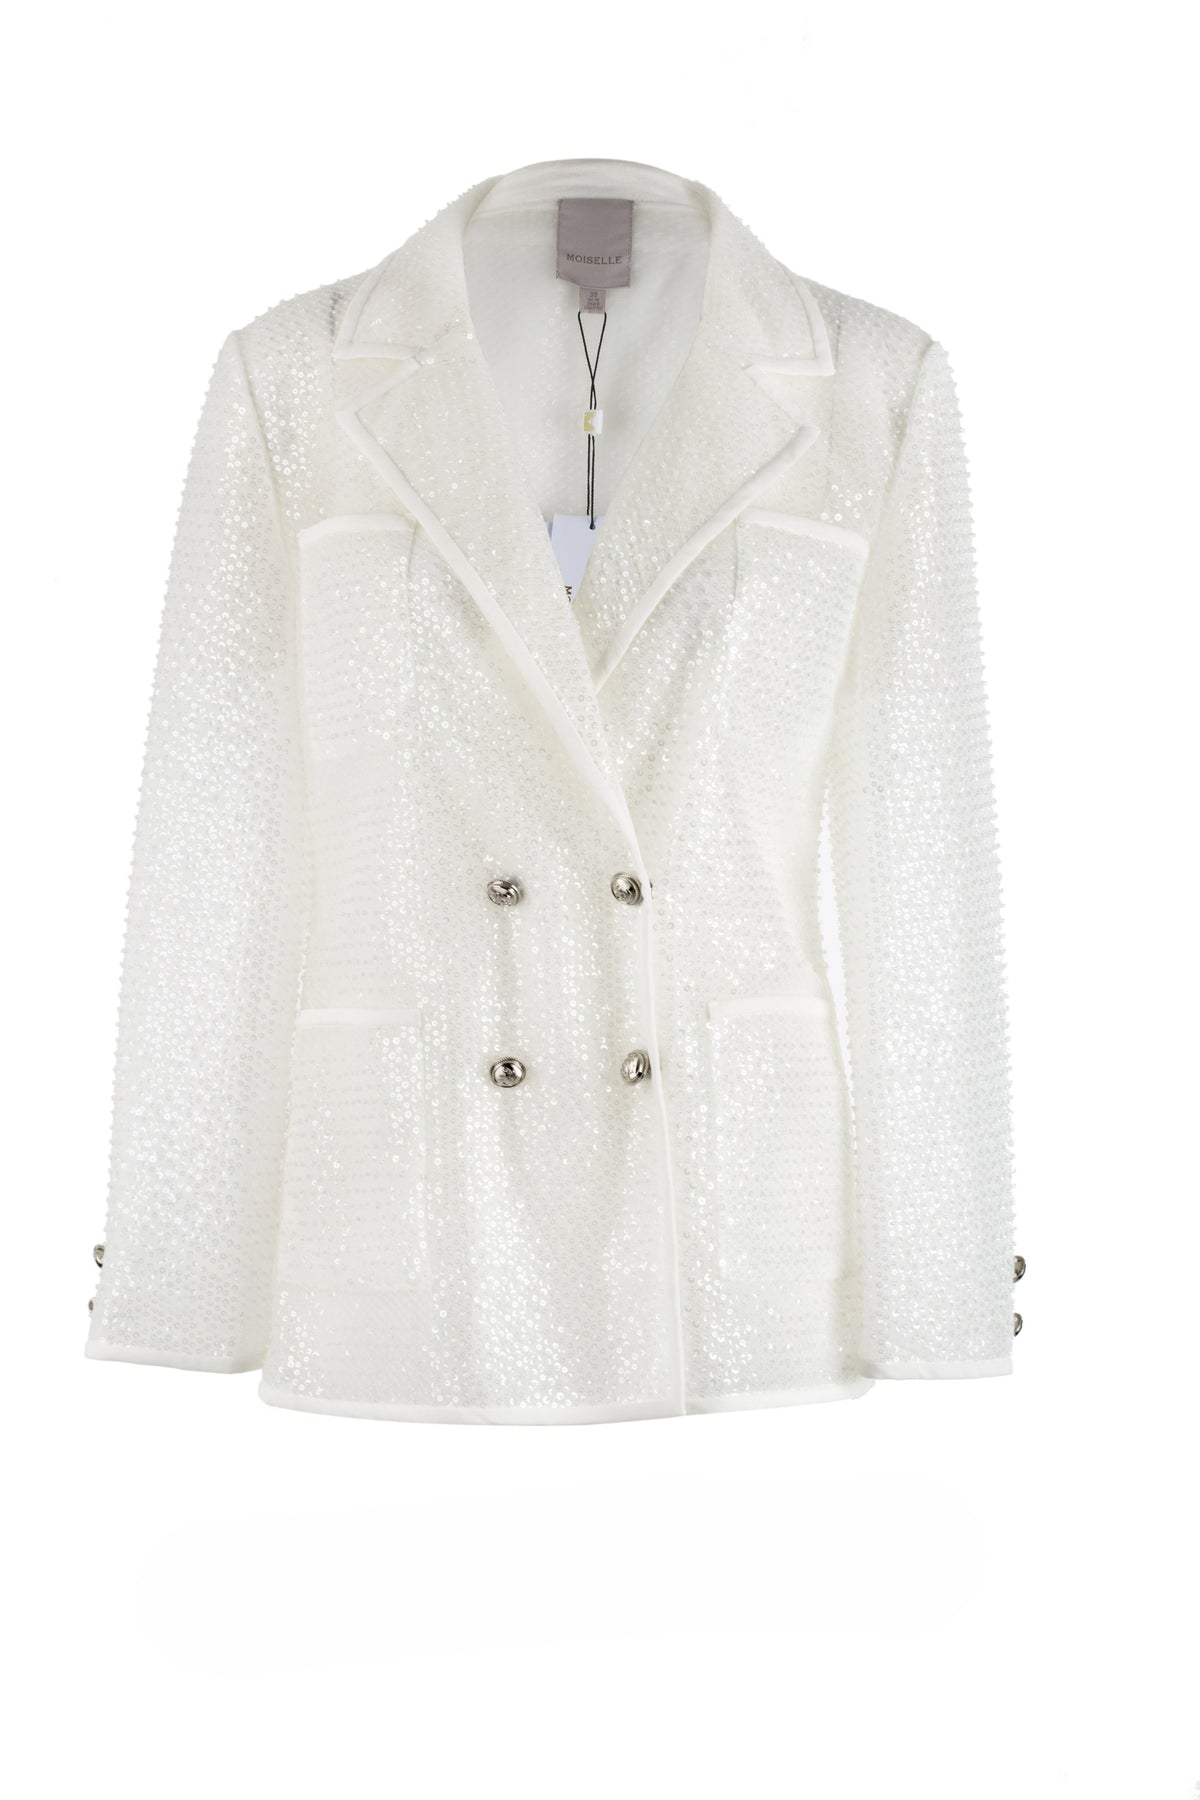 Retro Fashion White Sequin Suit